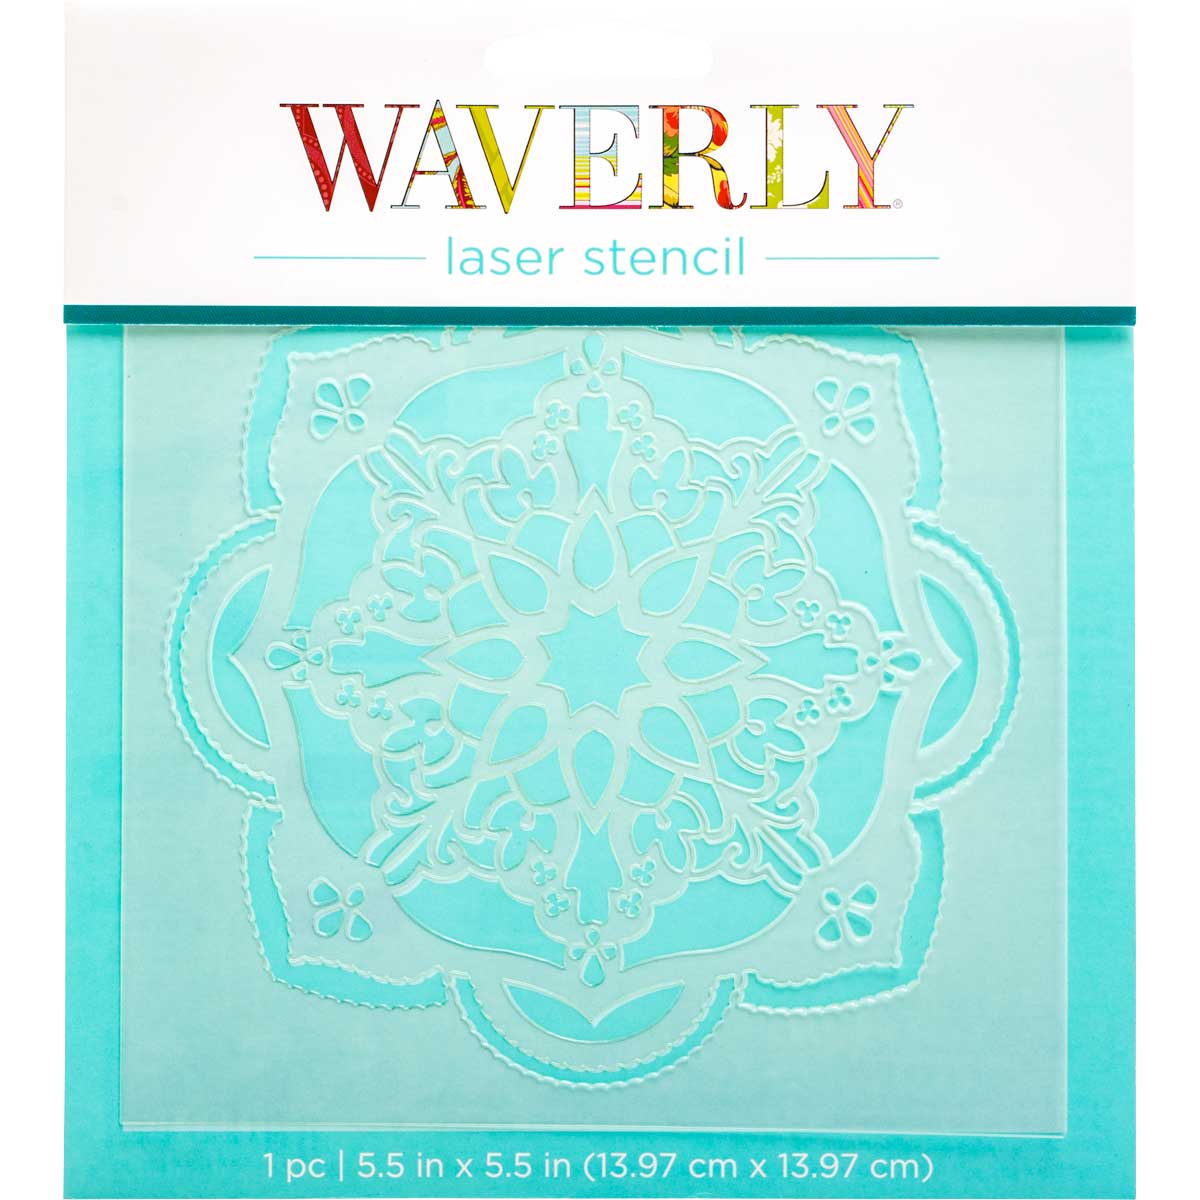 Waverly ® Laser Stencils - Tile Medallion, 5.5